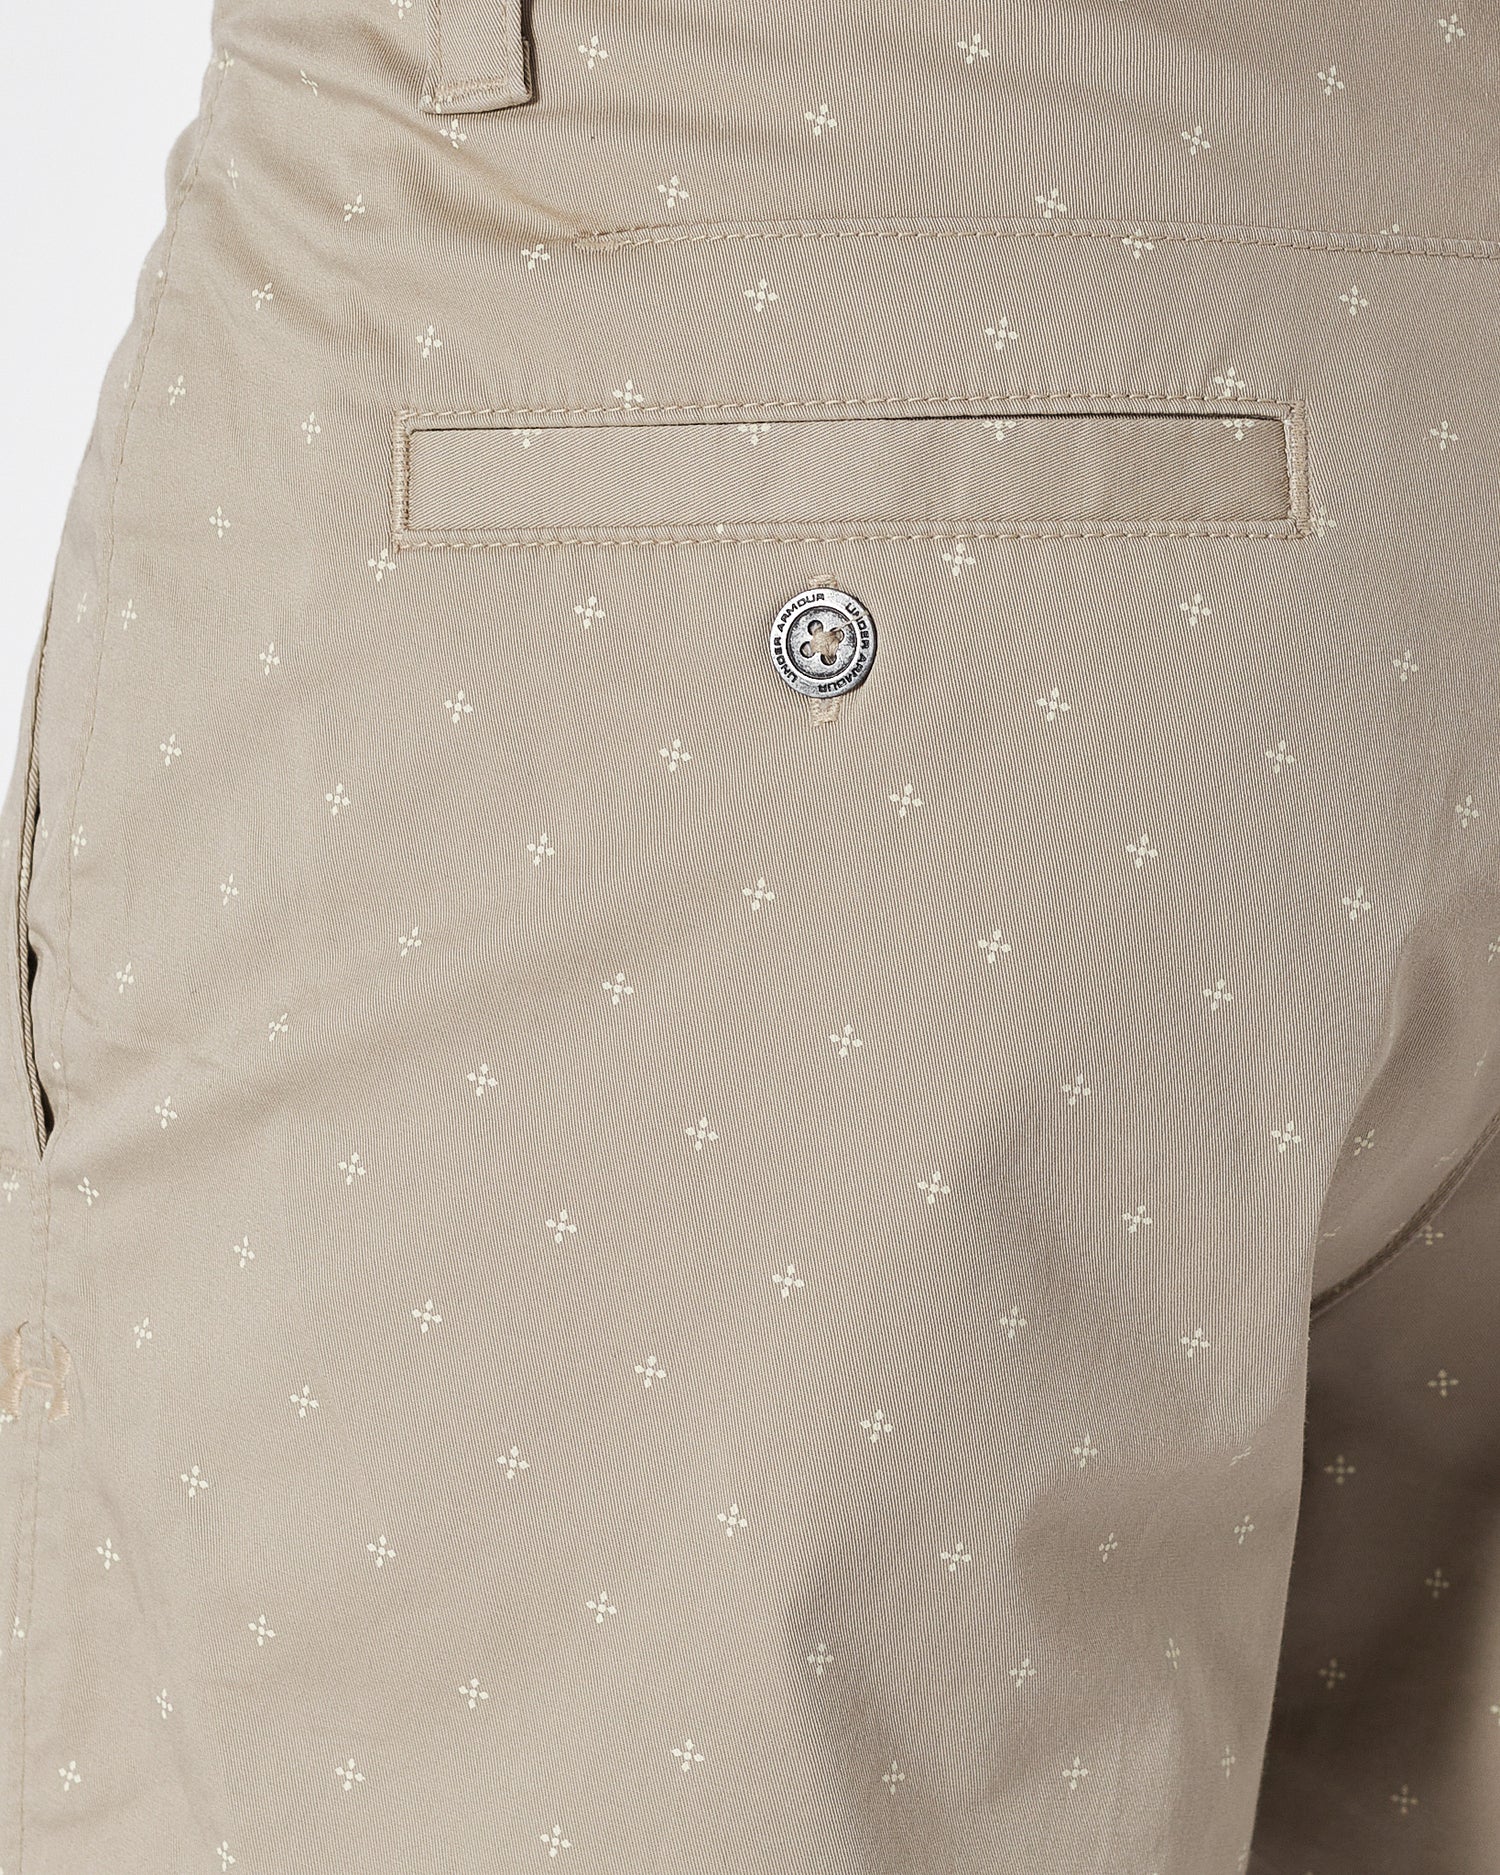 UA Star Over Printed Men Cream Short Pants 18.50